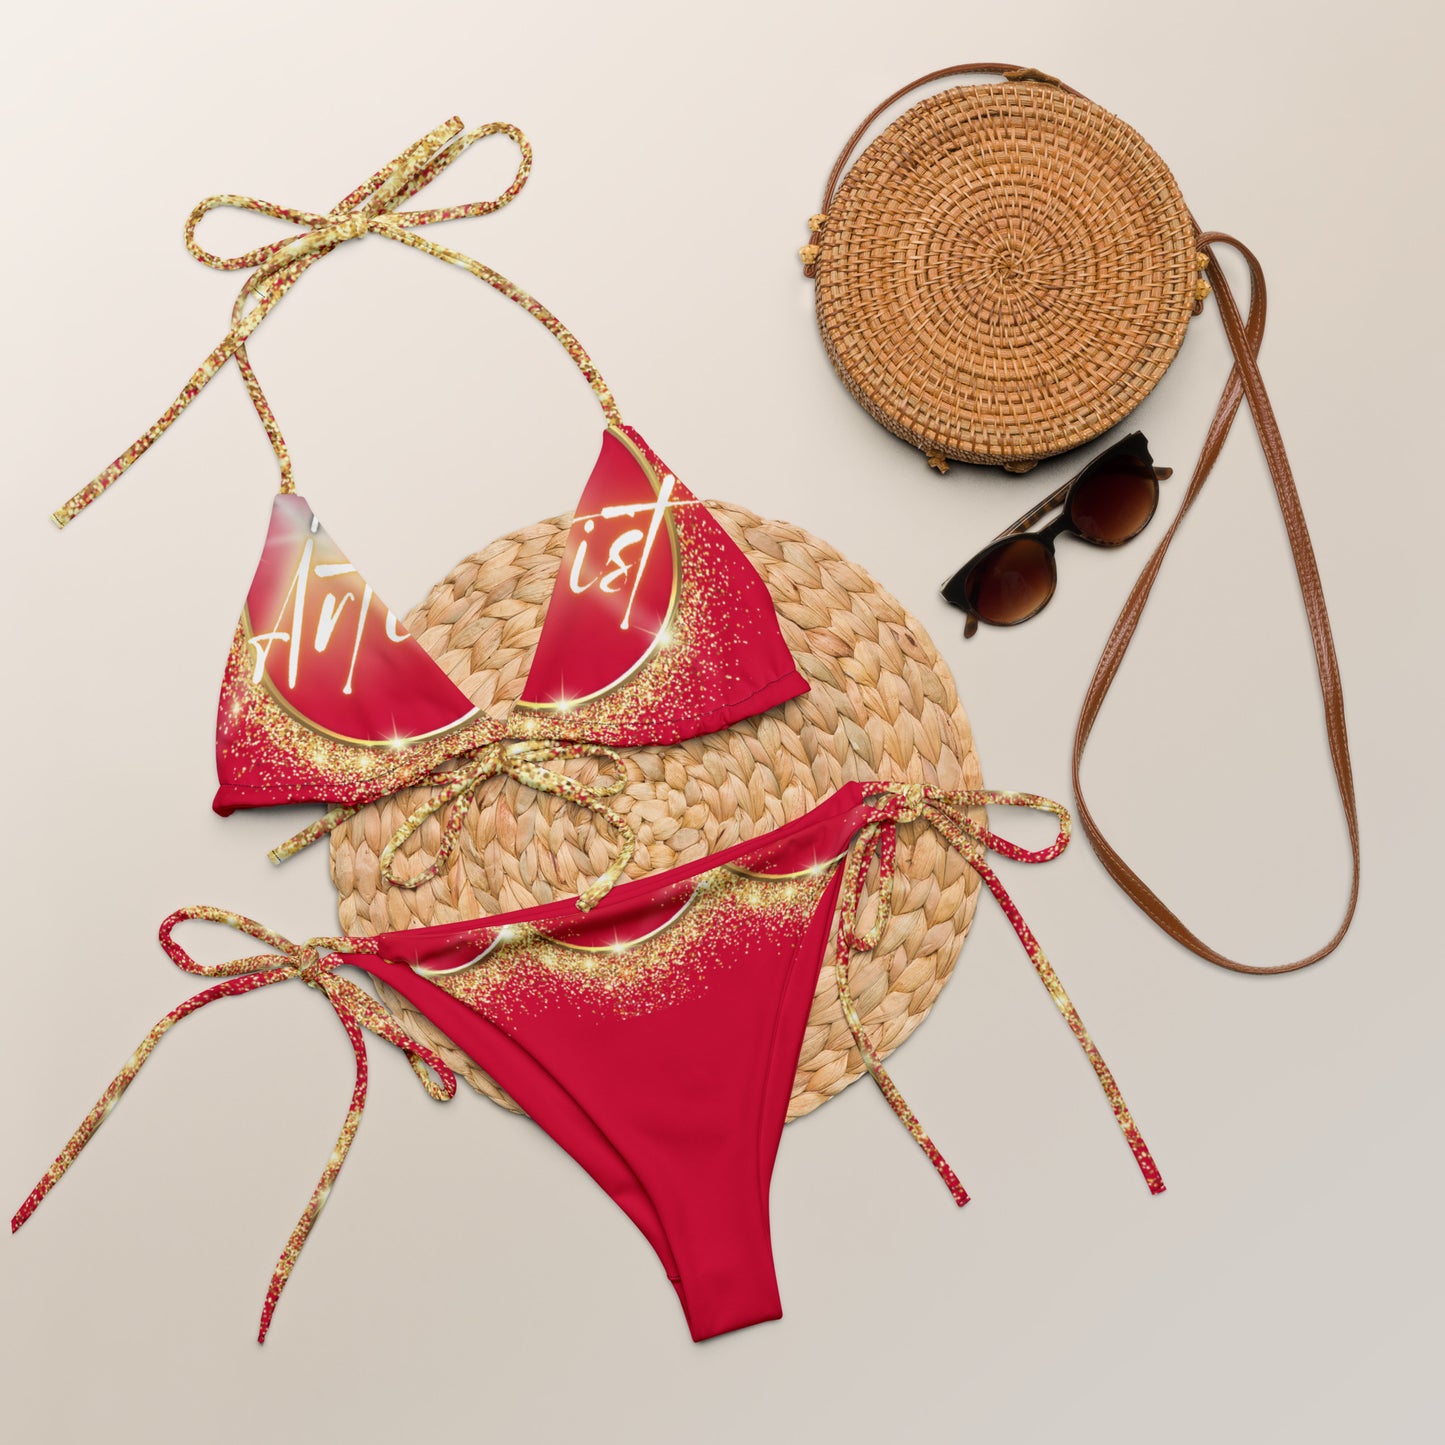 Crimson Rebel Artist Sting Bikini - A fiery crimson bikini with an empowering design, embodying artistic passion and allure.